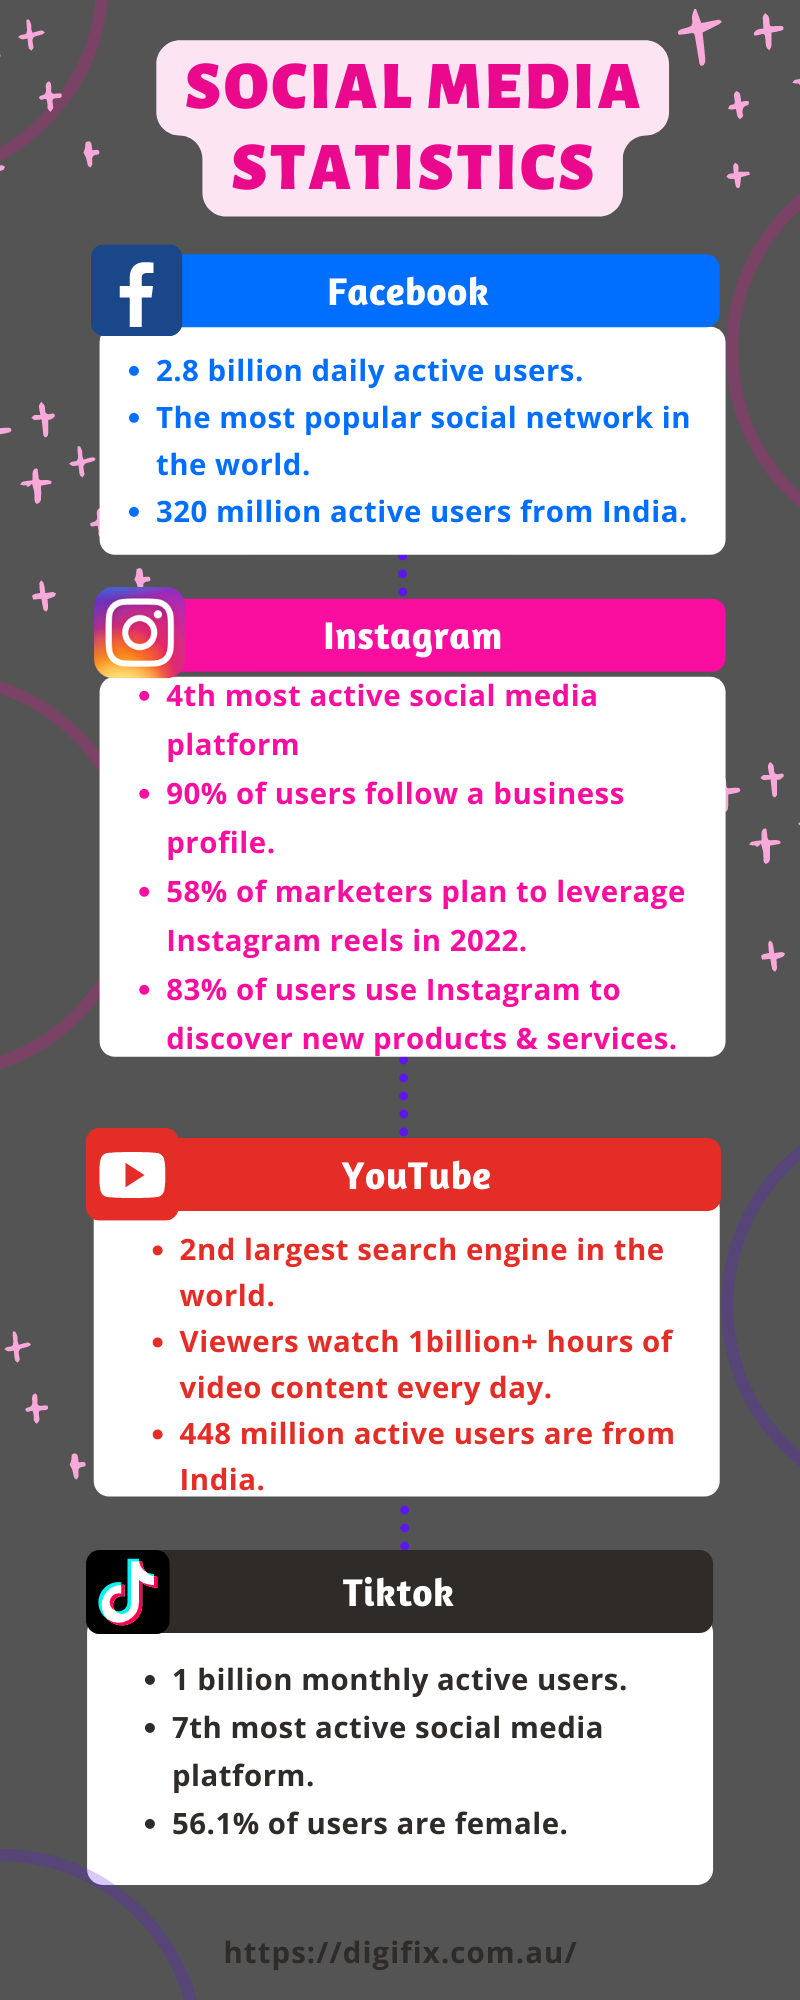 SOCIAL MEDIA STATISTICS Ultimate Guide to Social Media Marketing